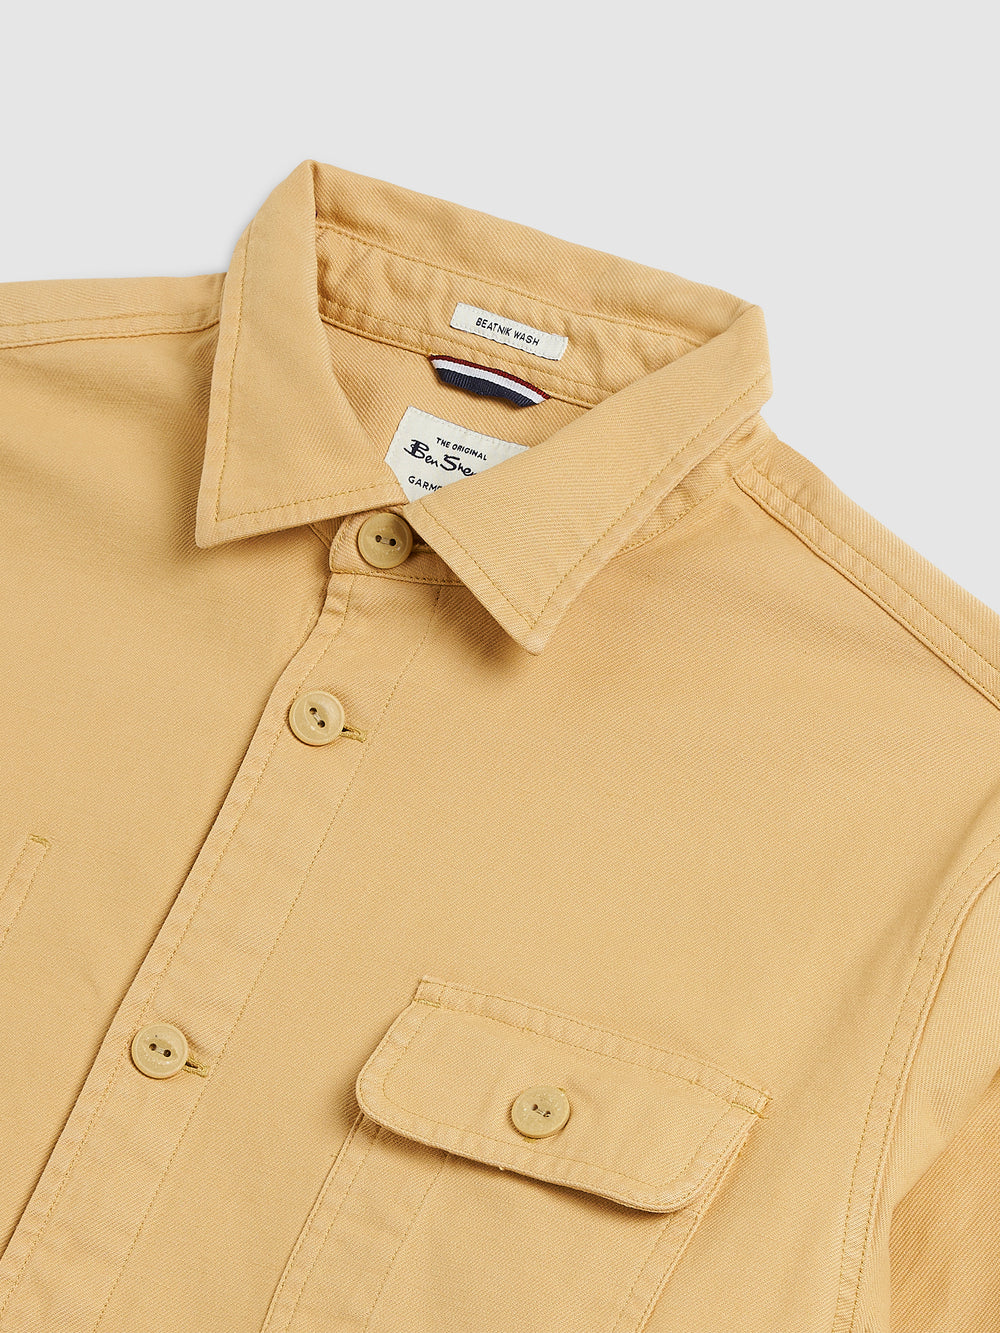 Garment Dye Chore Shirt Jacket - Mustard Yellow